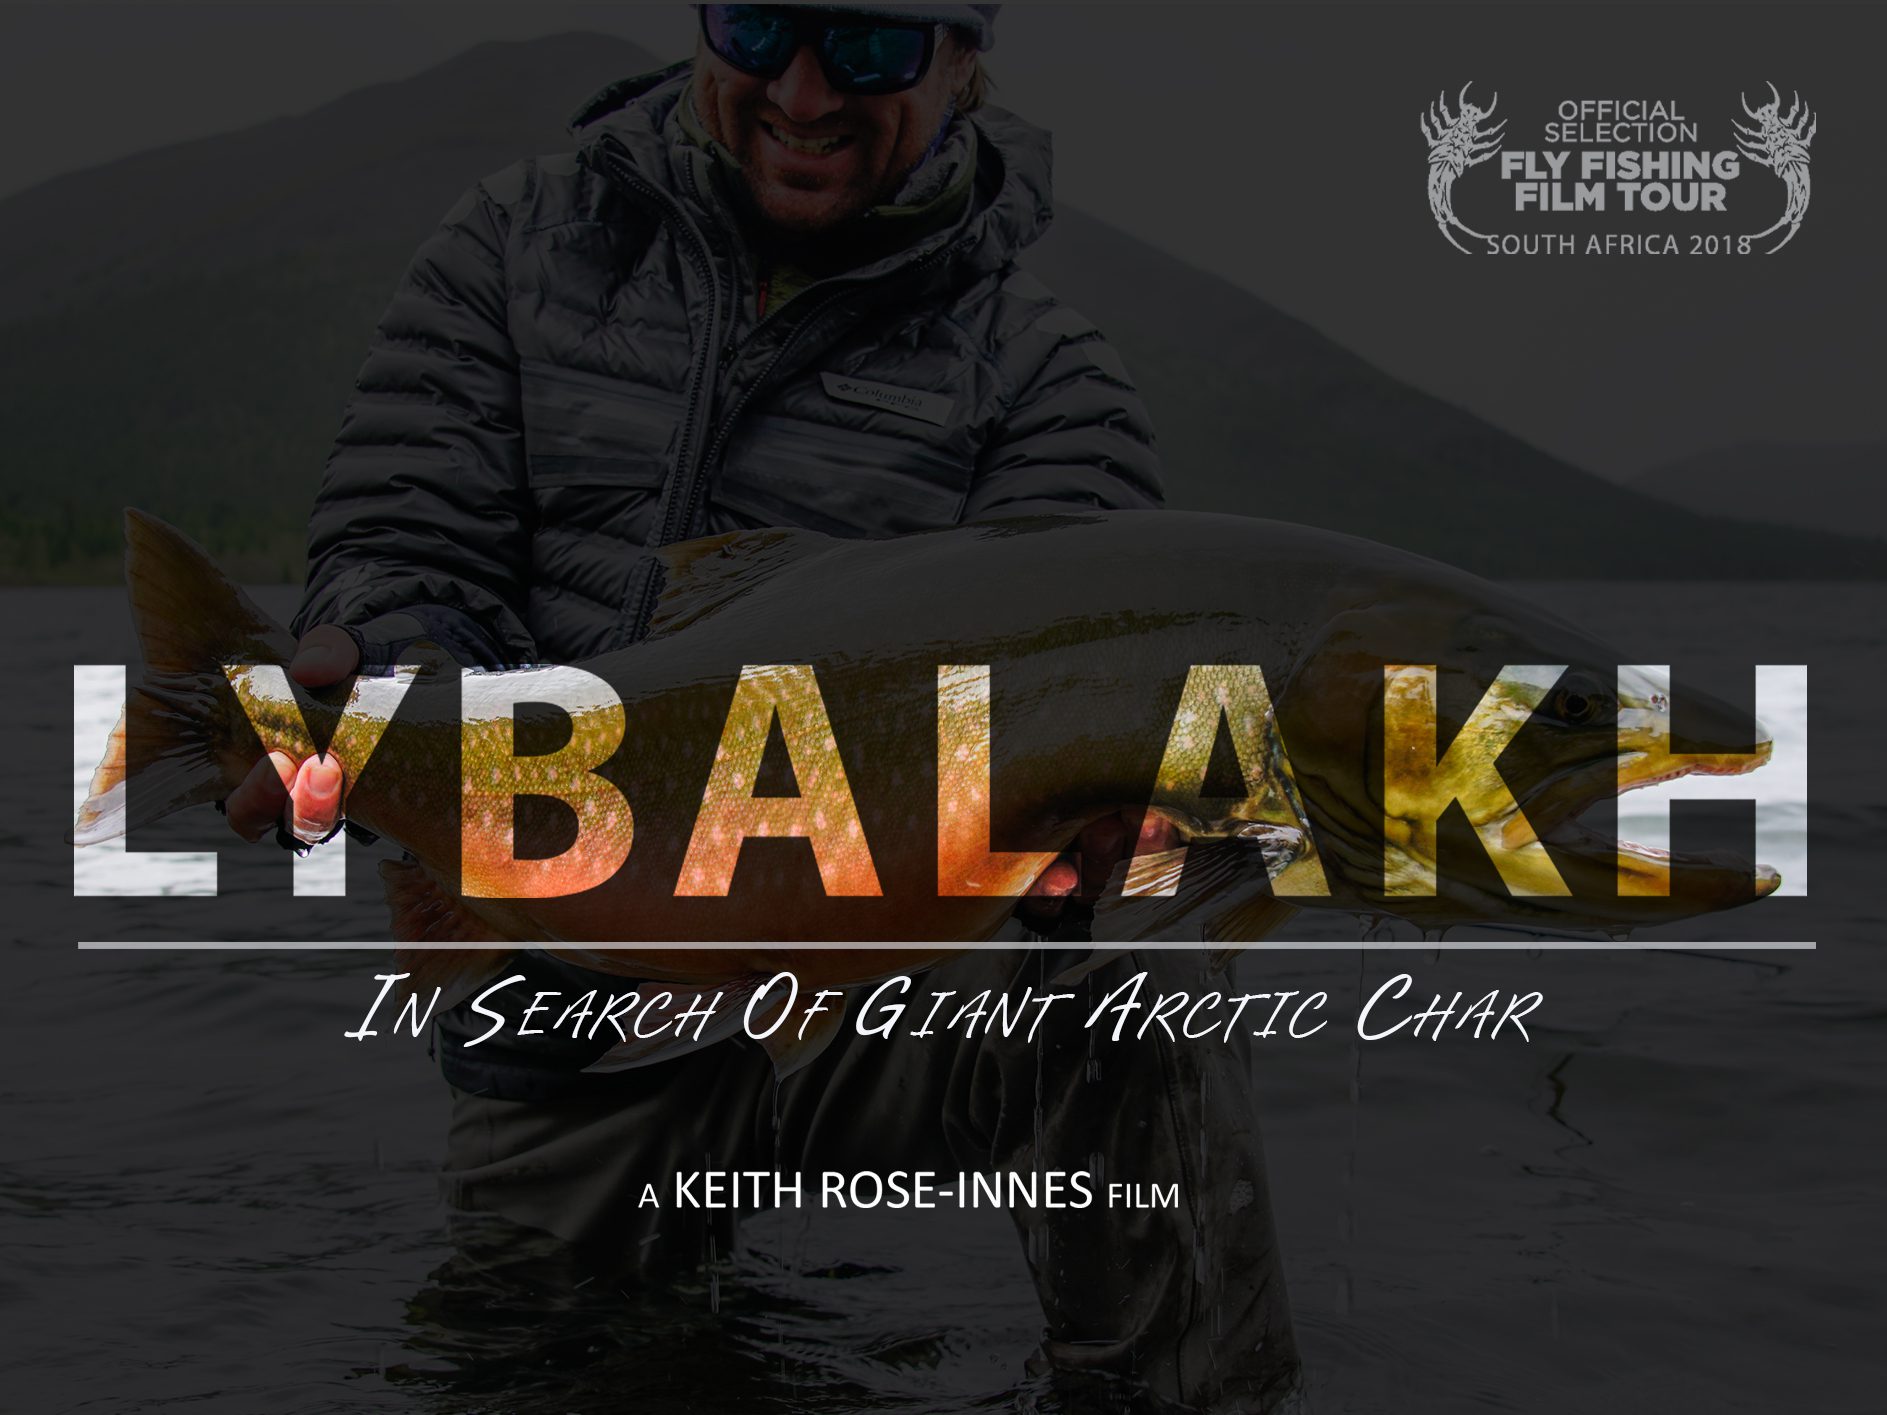 LYBALAKH LAKE, YAKUTIA – In search of giant arctic char